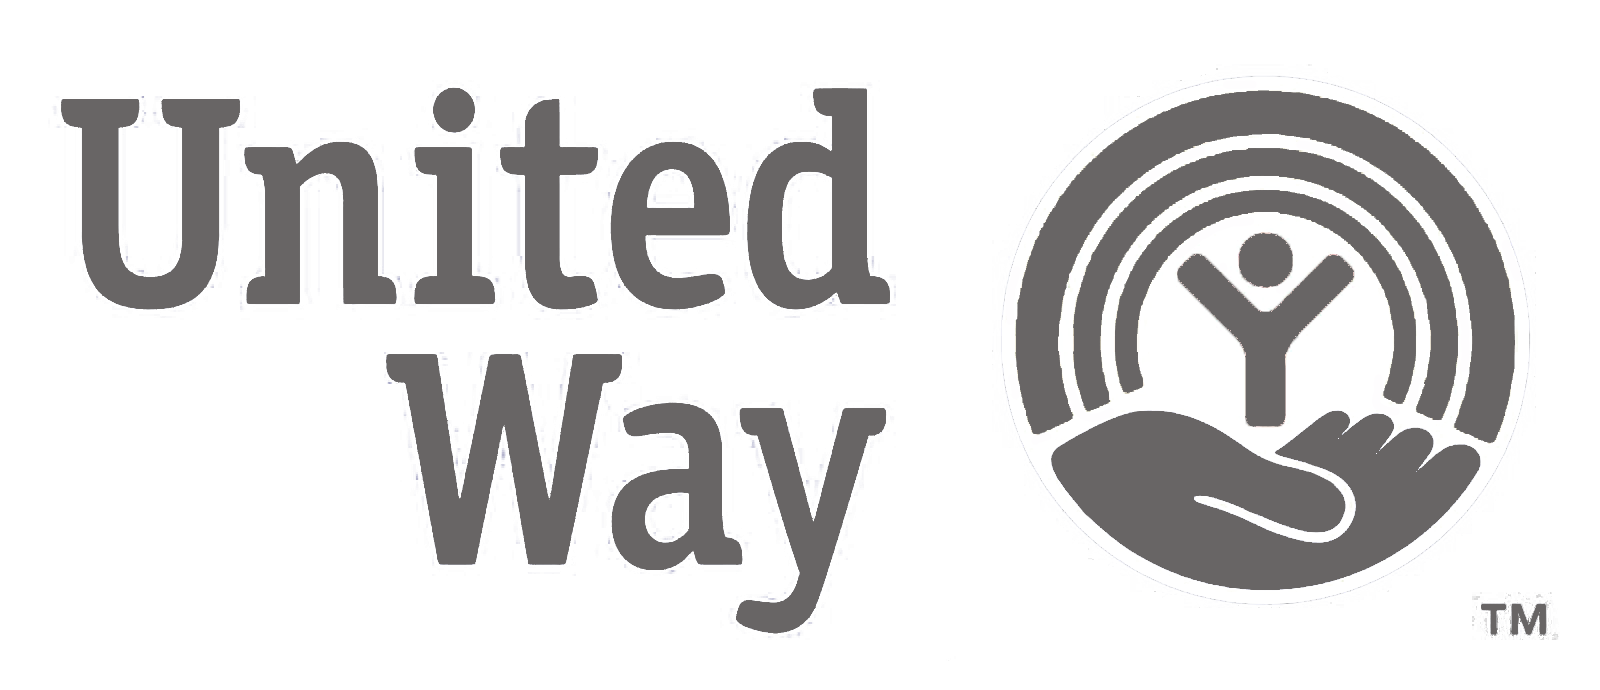 United Way logo.png